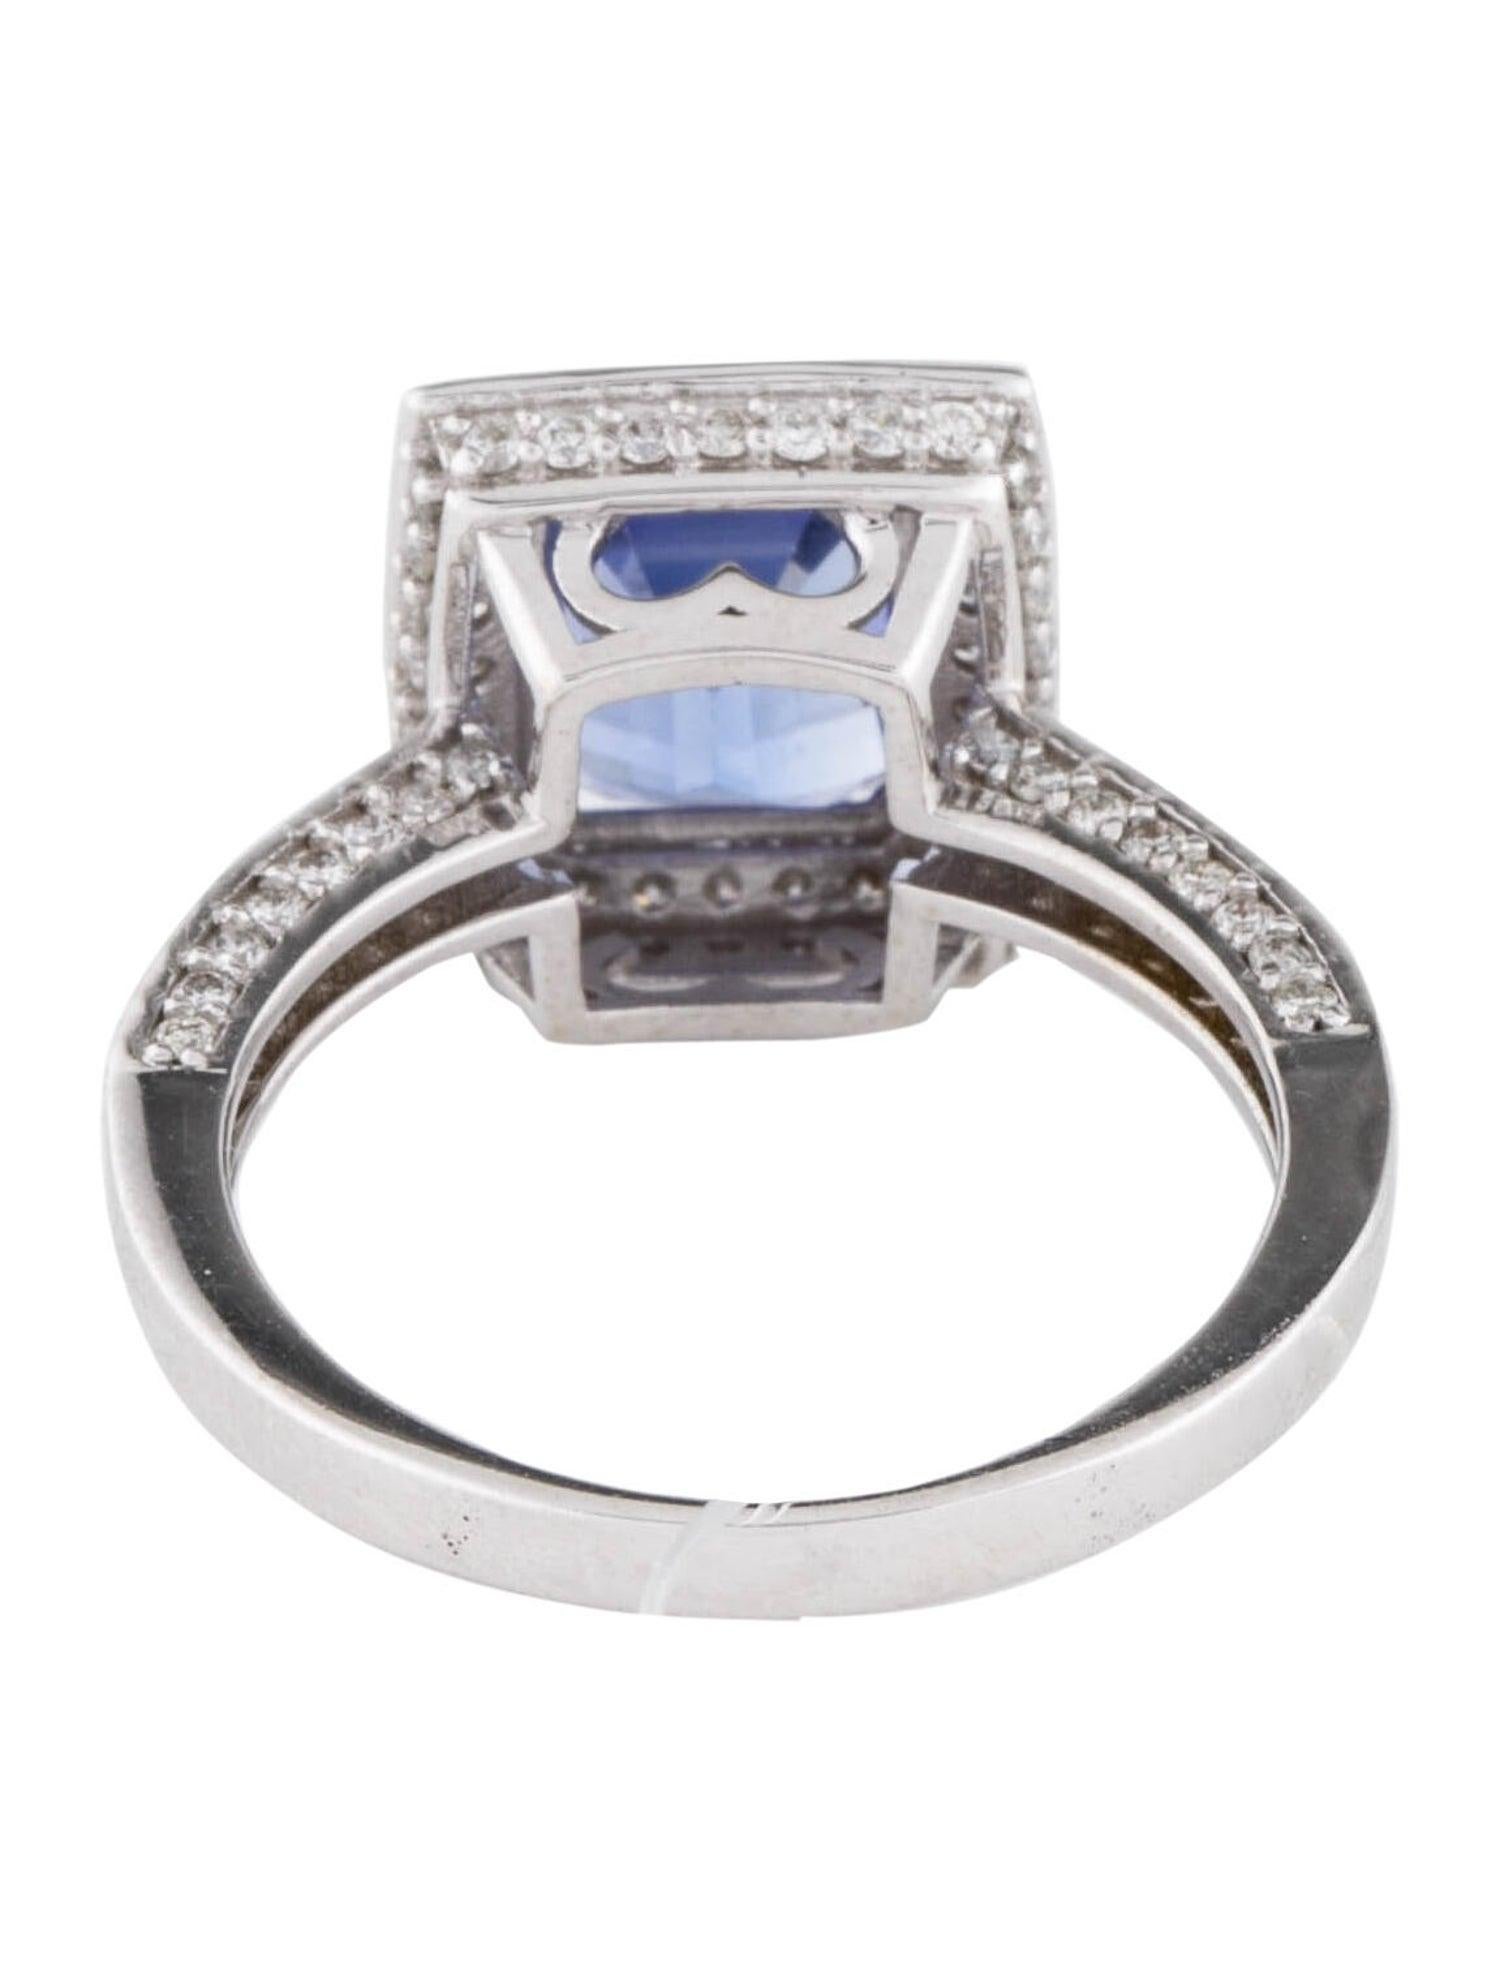 Brilliant Cut 14K Tanzanite & Diamond Cocktail Ring - 2.67ctw - Size 7 - Statement Jewelry For Sale